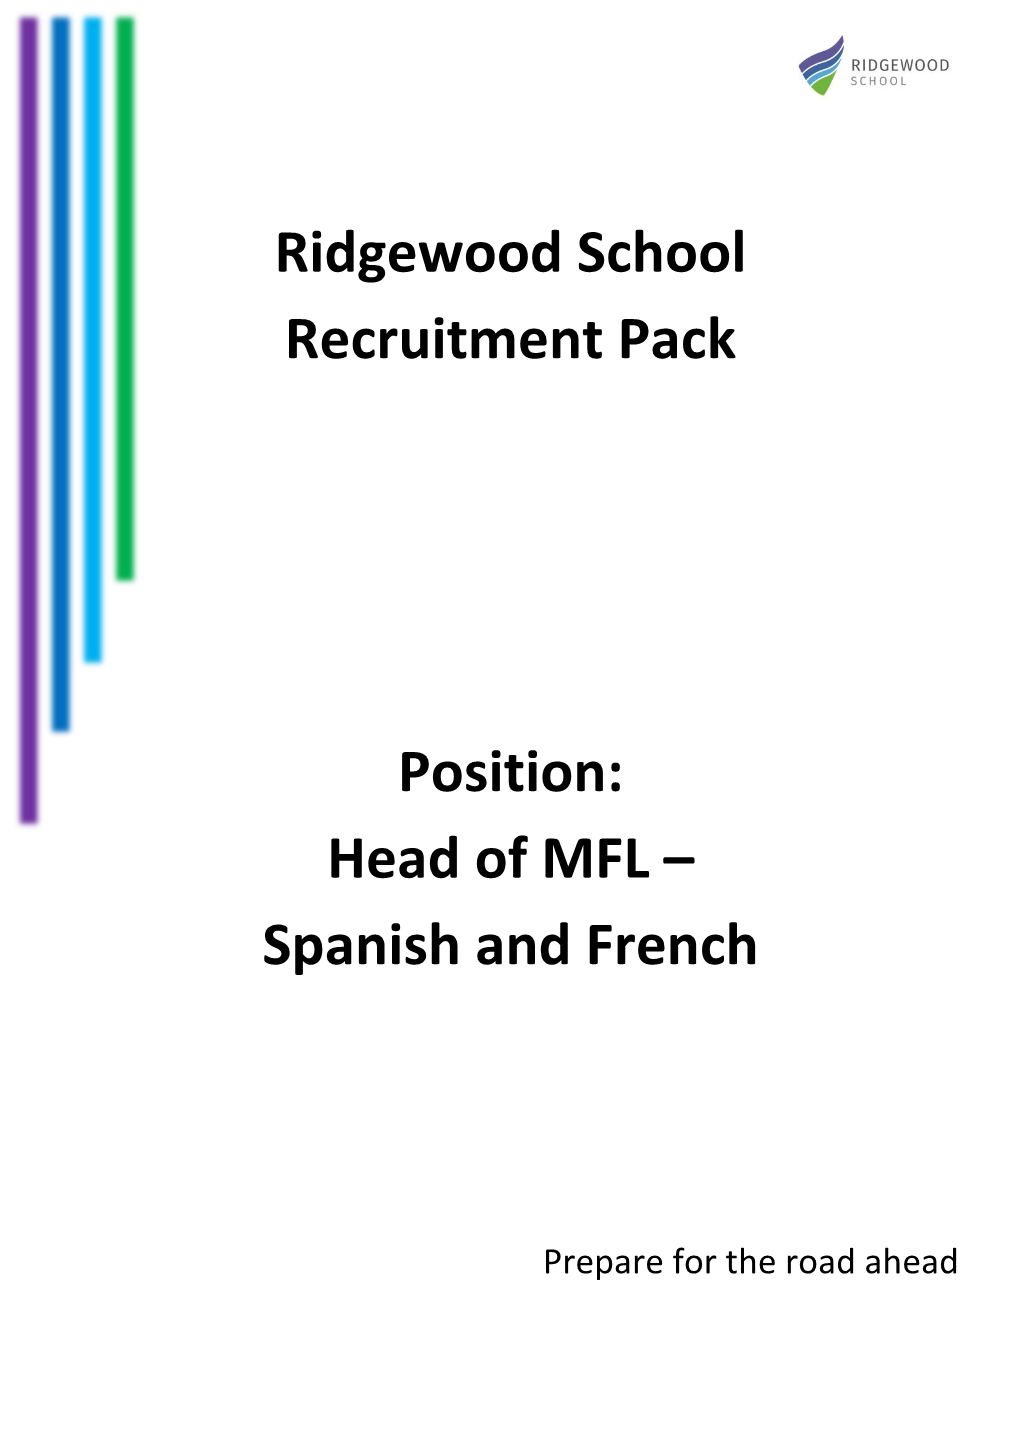 Ridgewood School Recruitment Pack Position